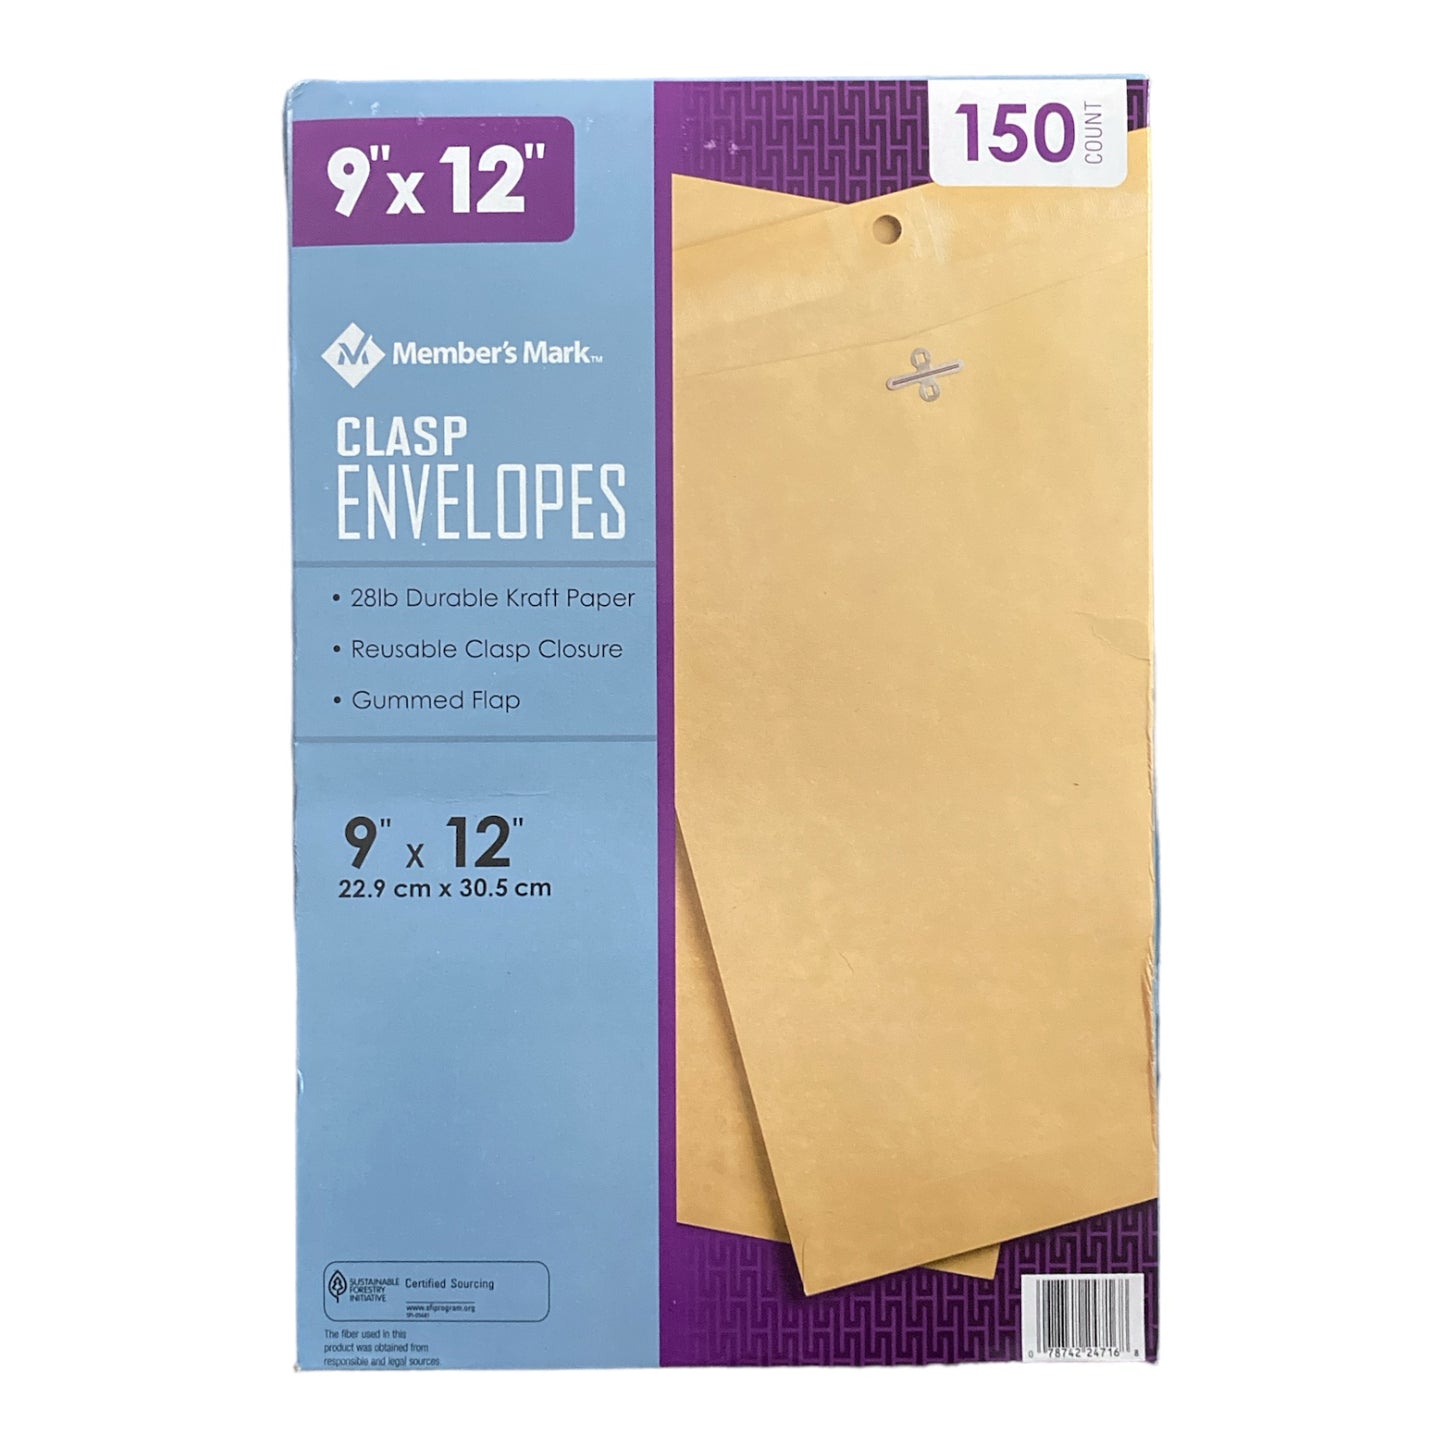 Member's Mark 28lb Durable Kraft Paper Clasp Envelope 9" x 12" (150 ct.)